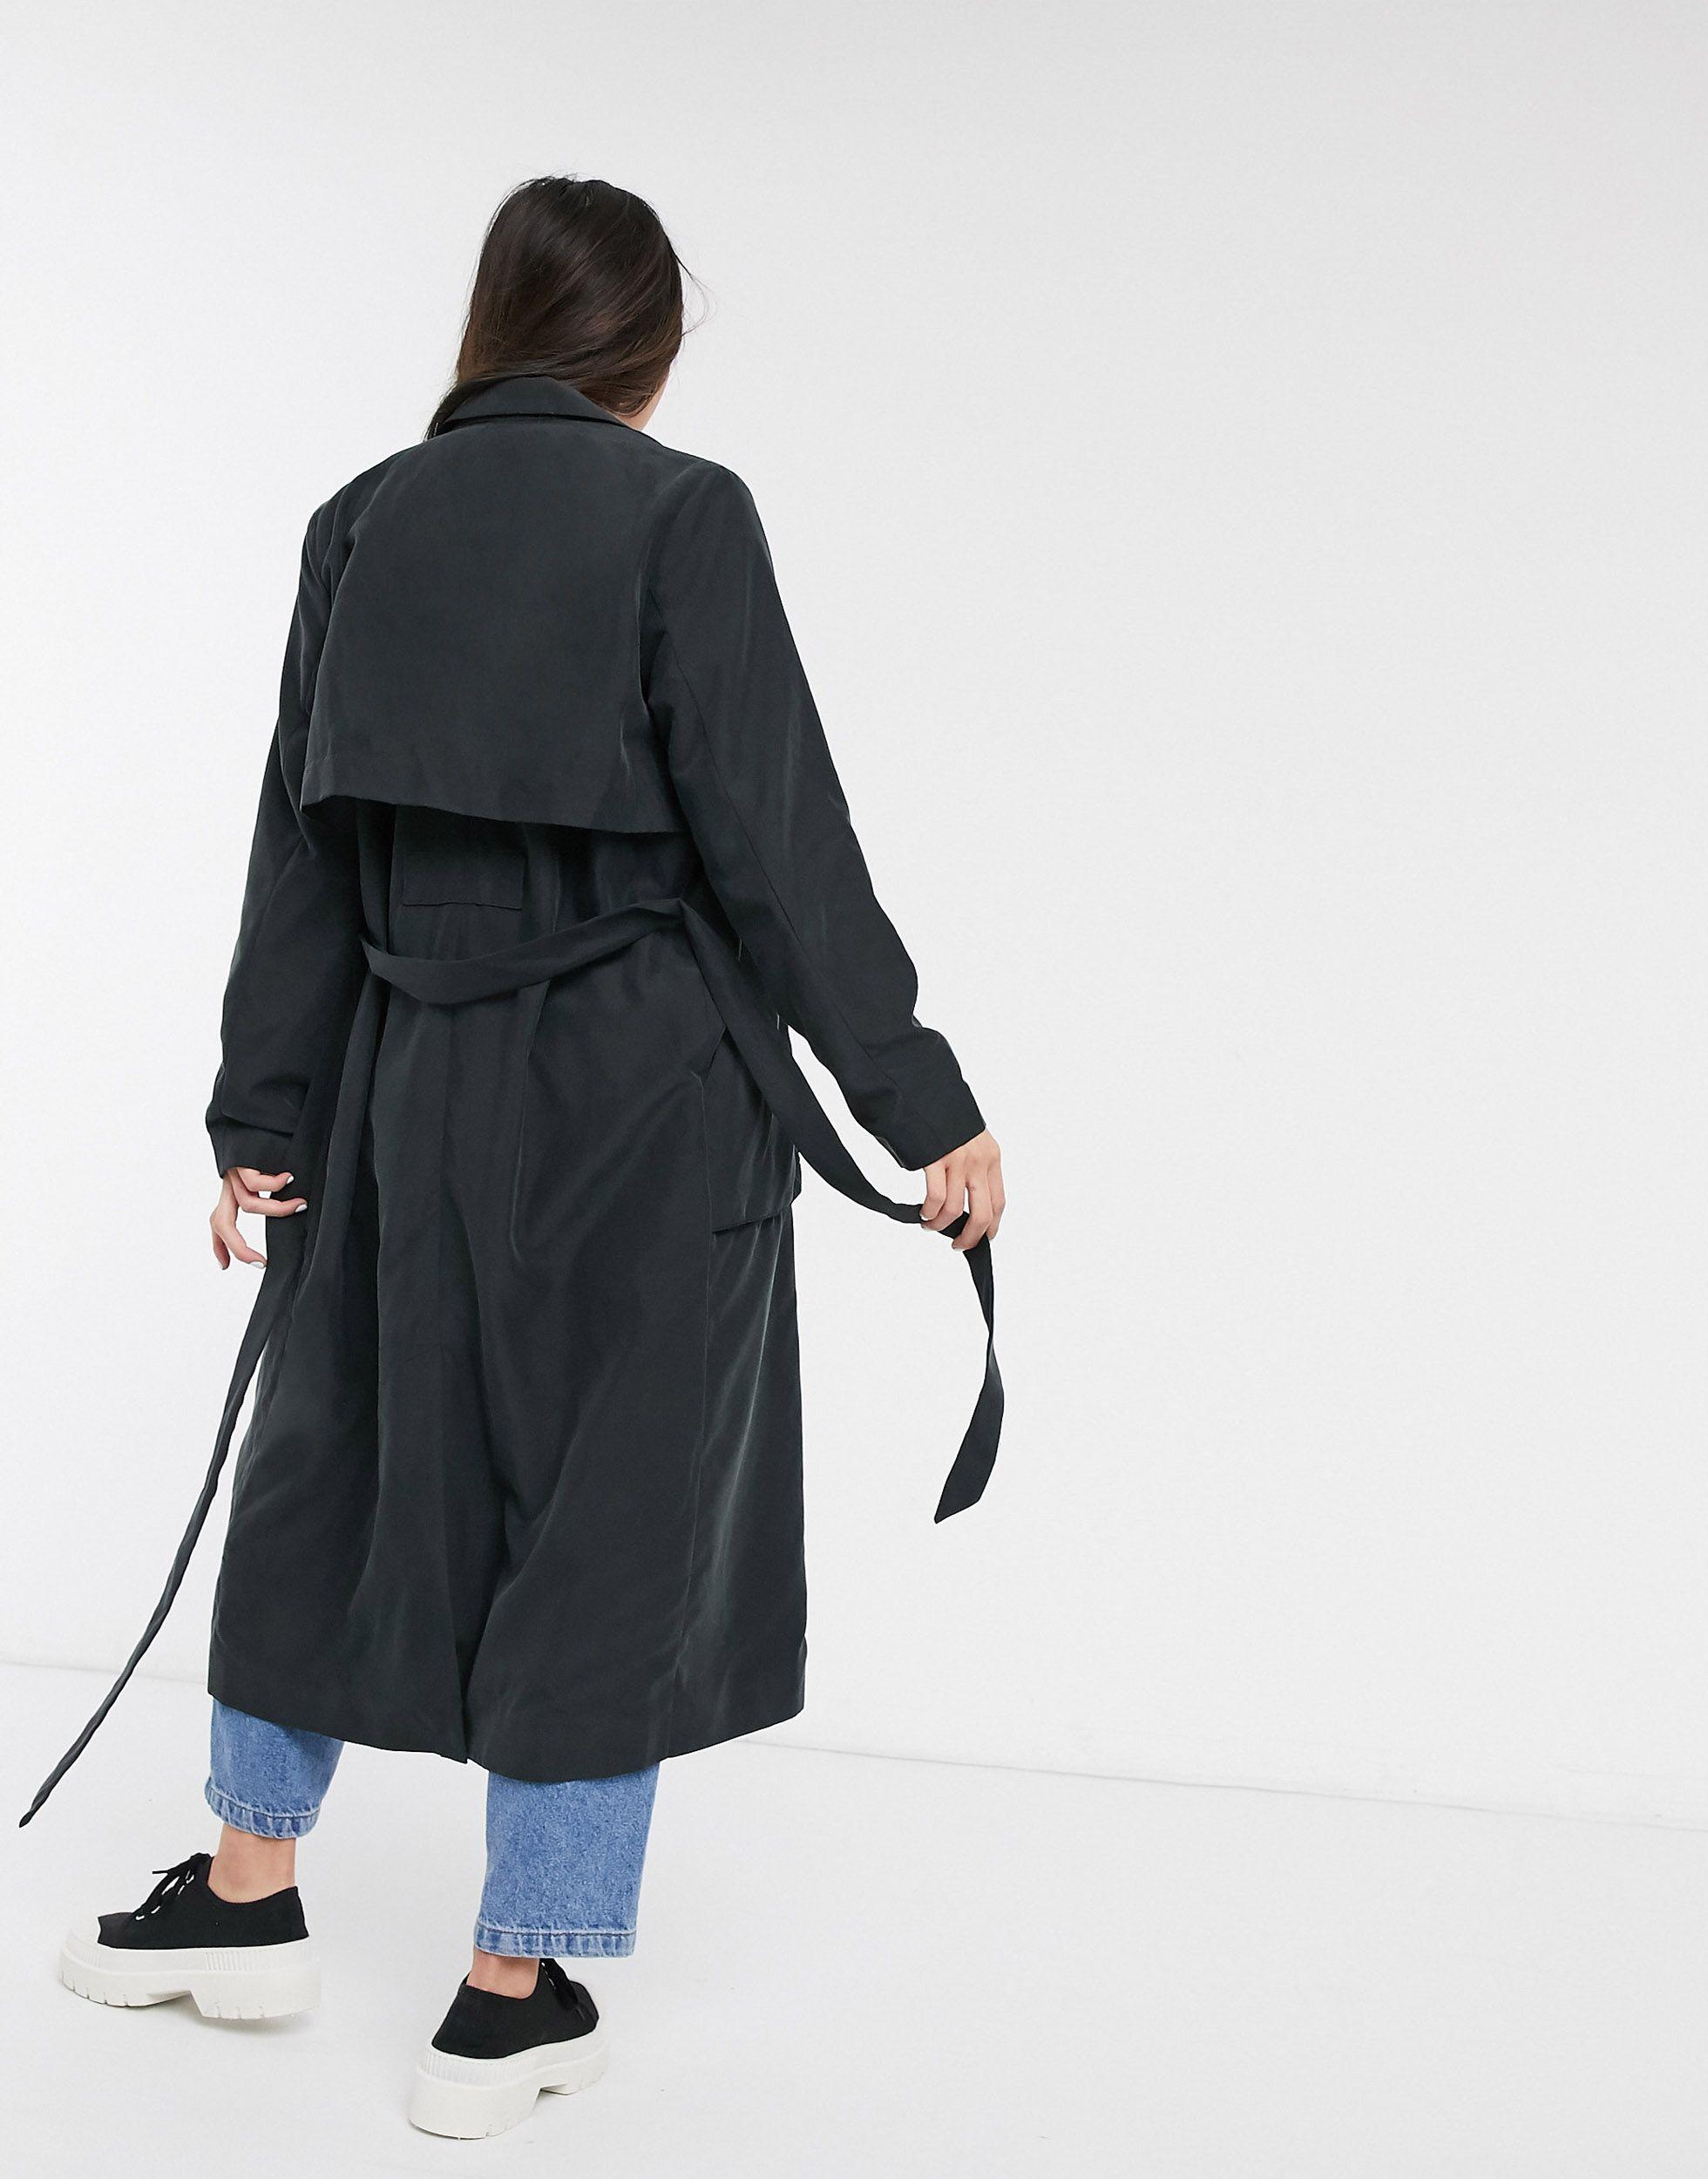 Monki Julie Belted Trench Coat in Black | Lyst